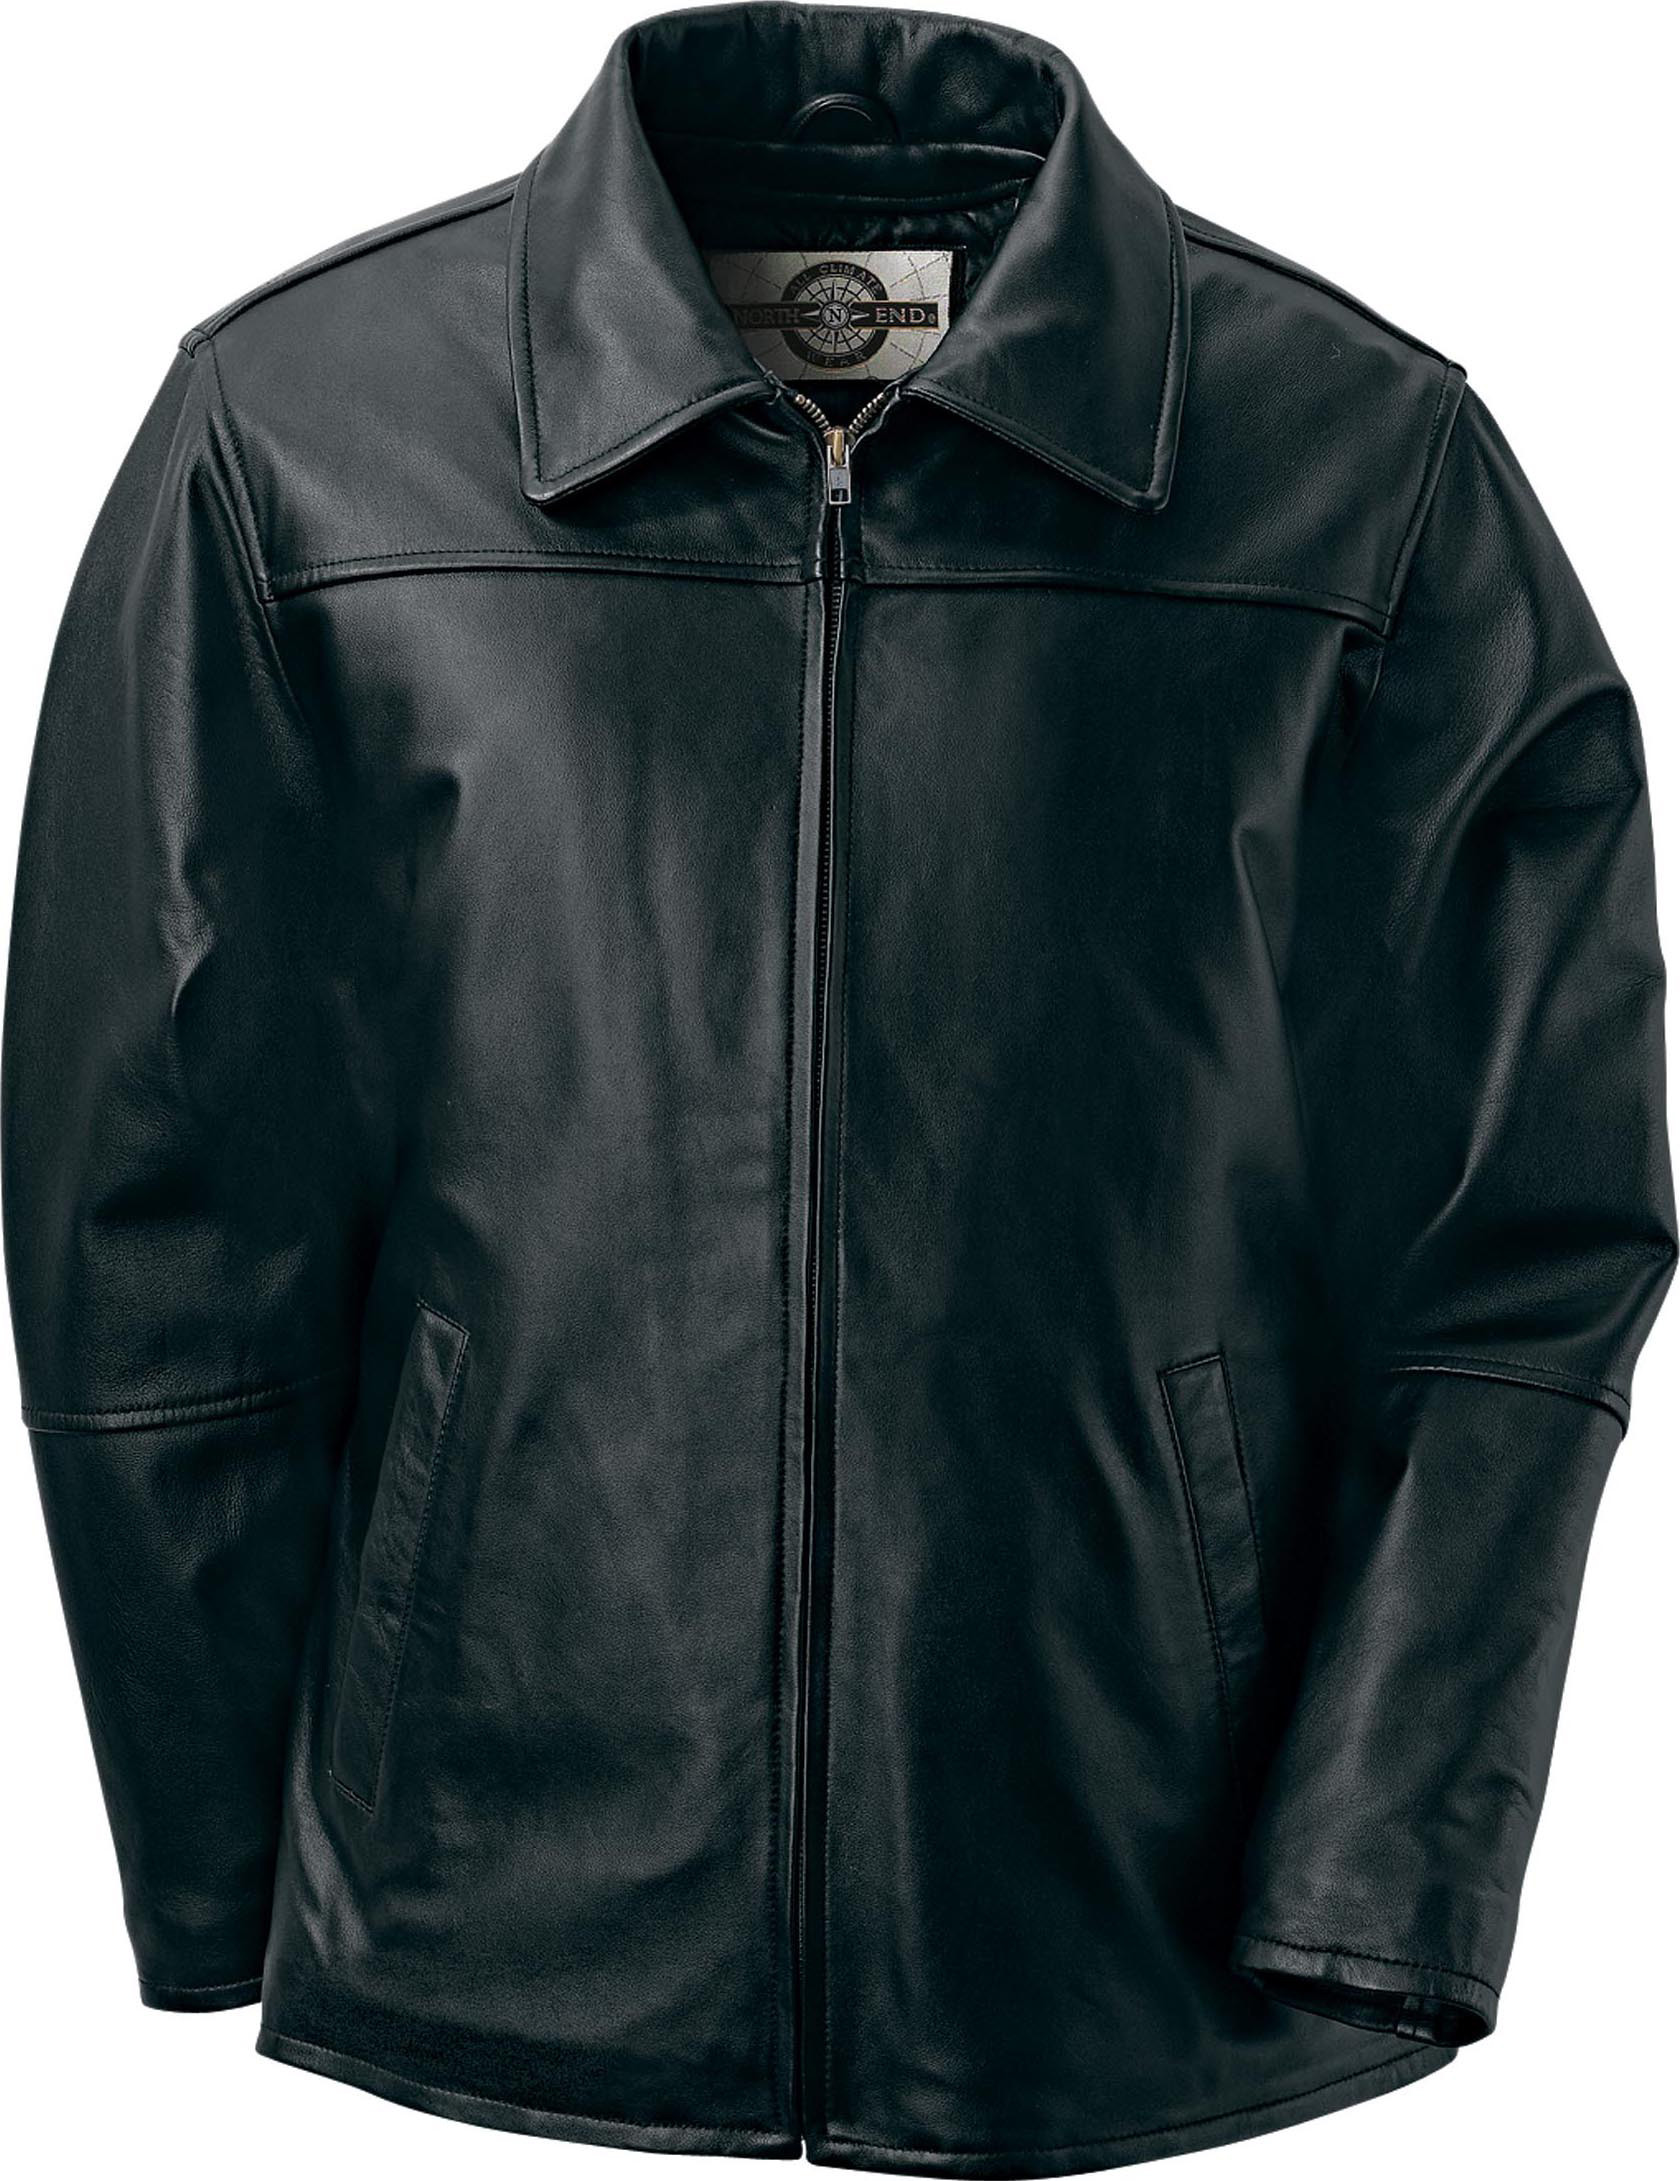 Ash City UTK 1 Warm.Logik 78009 - Ladies' Leather Mid Length Jacket